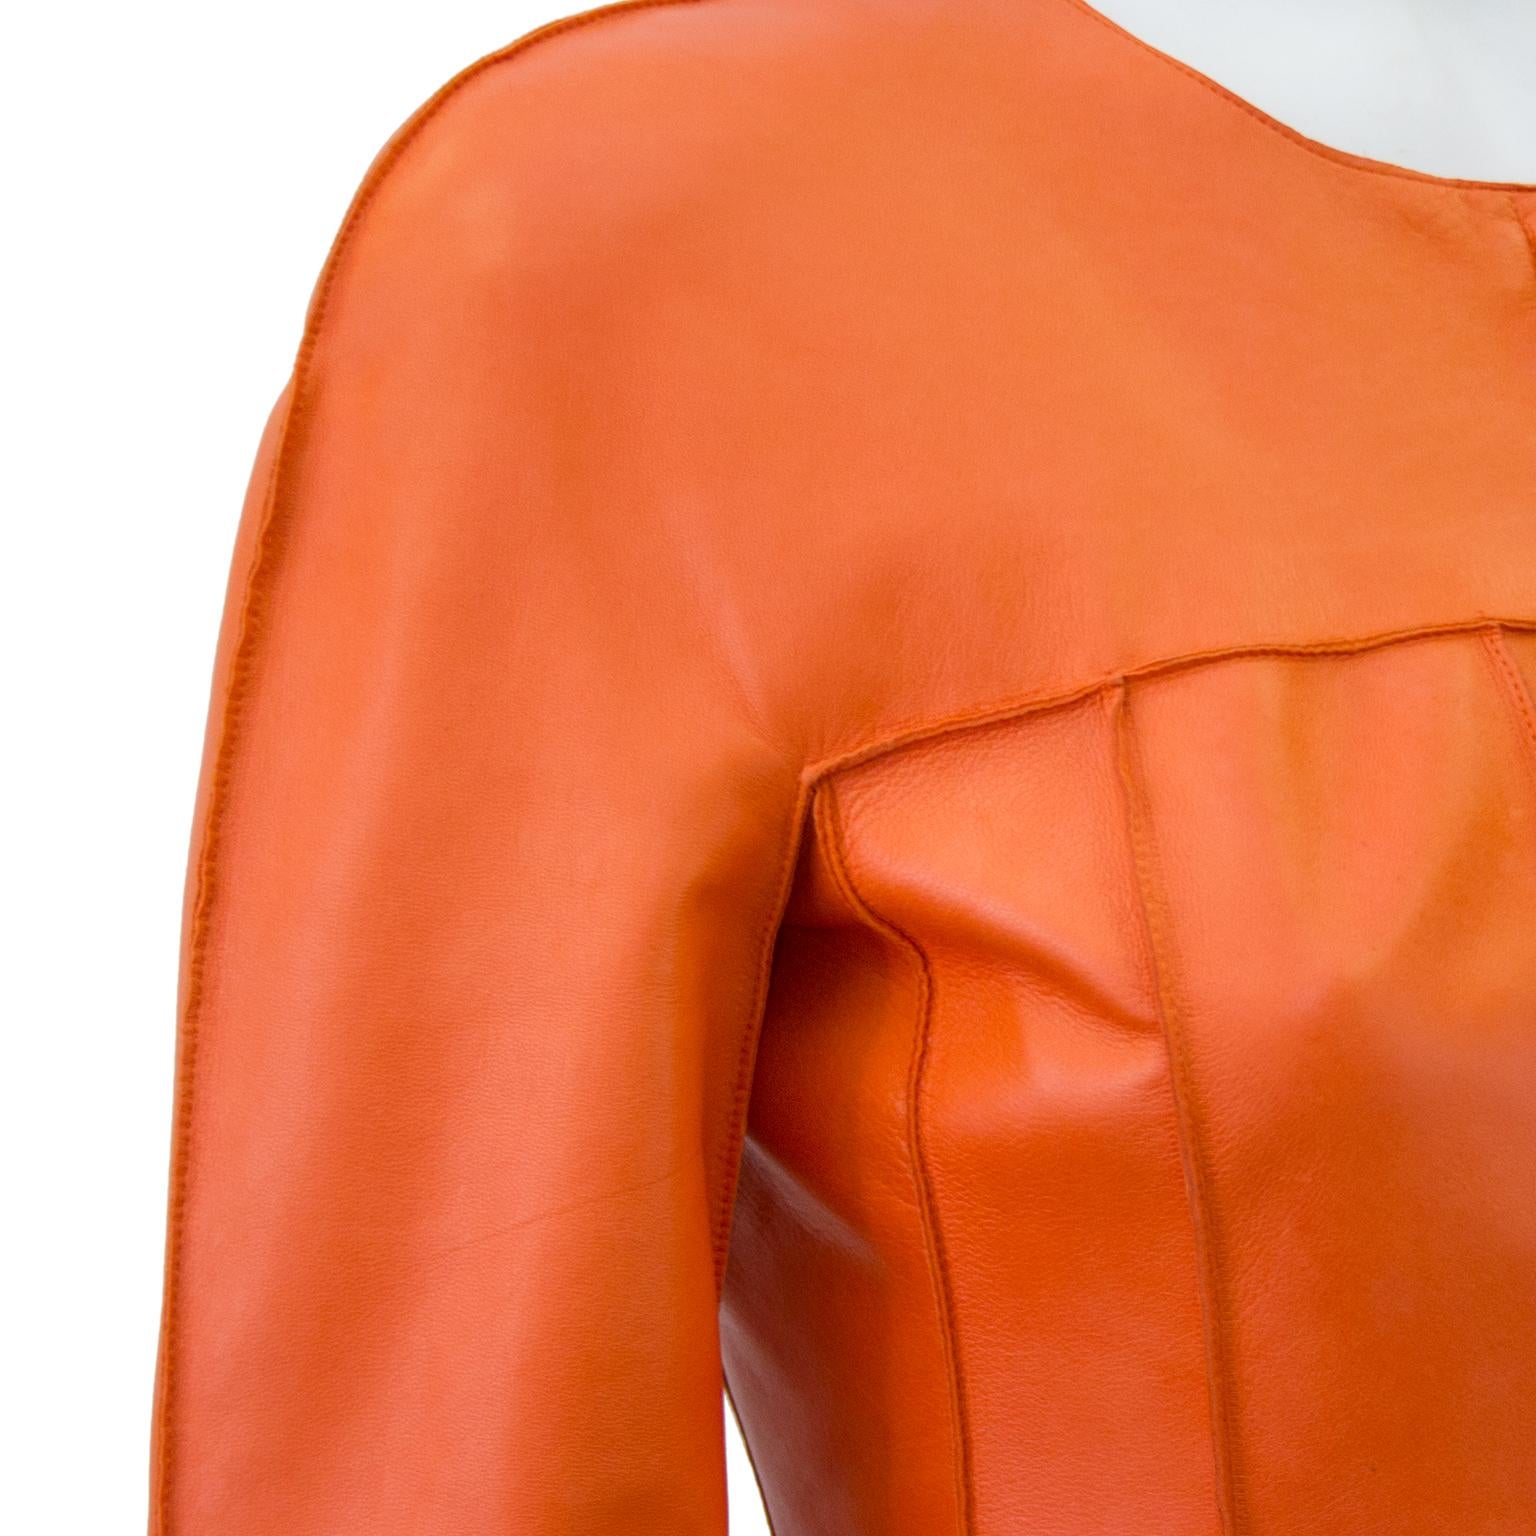 Chanel - Veste courte en cuir orange, printemps 1999 Bon état - En vente à Toronto, Ontario